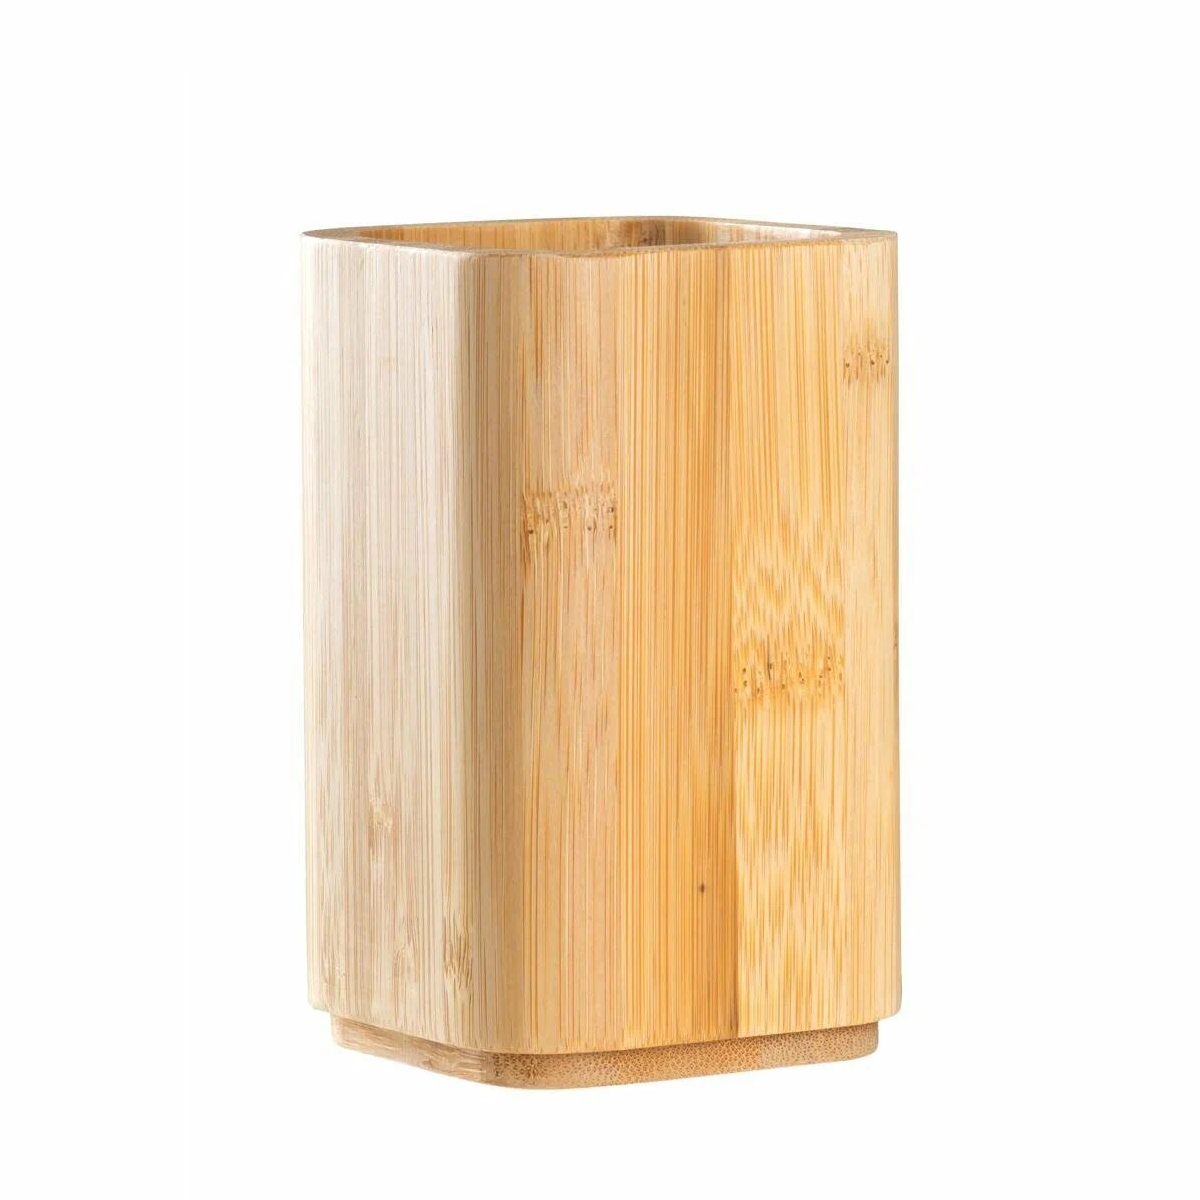 Стаканчик Ridder Natural бамбук кружка керамическая stor миньоны all natural 325 мл